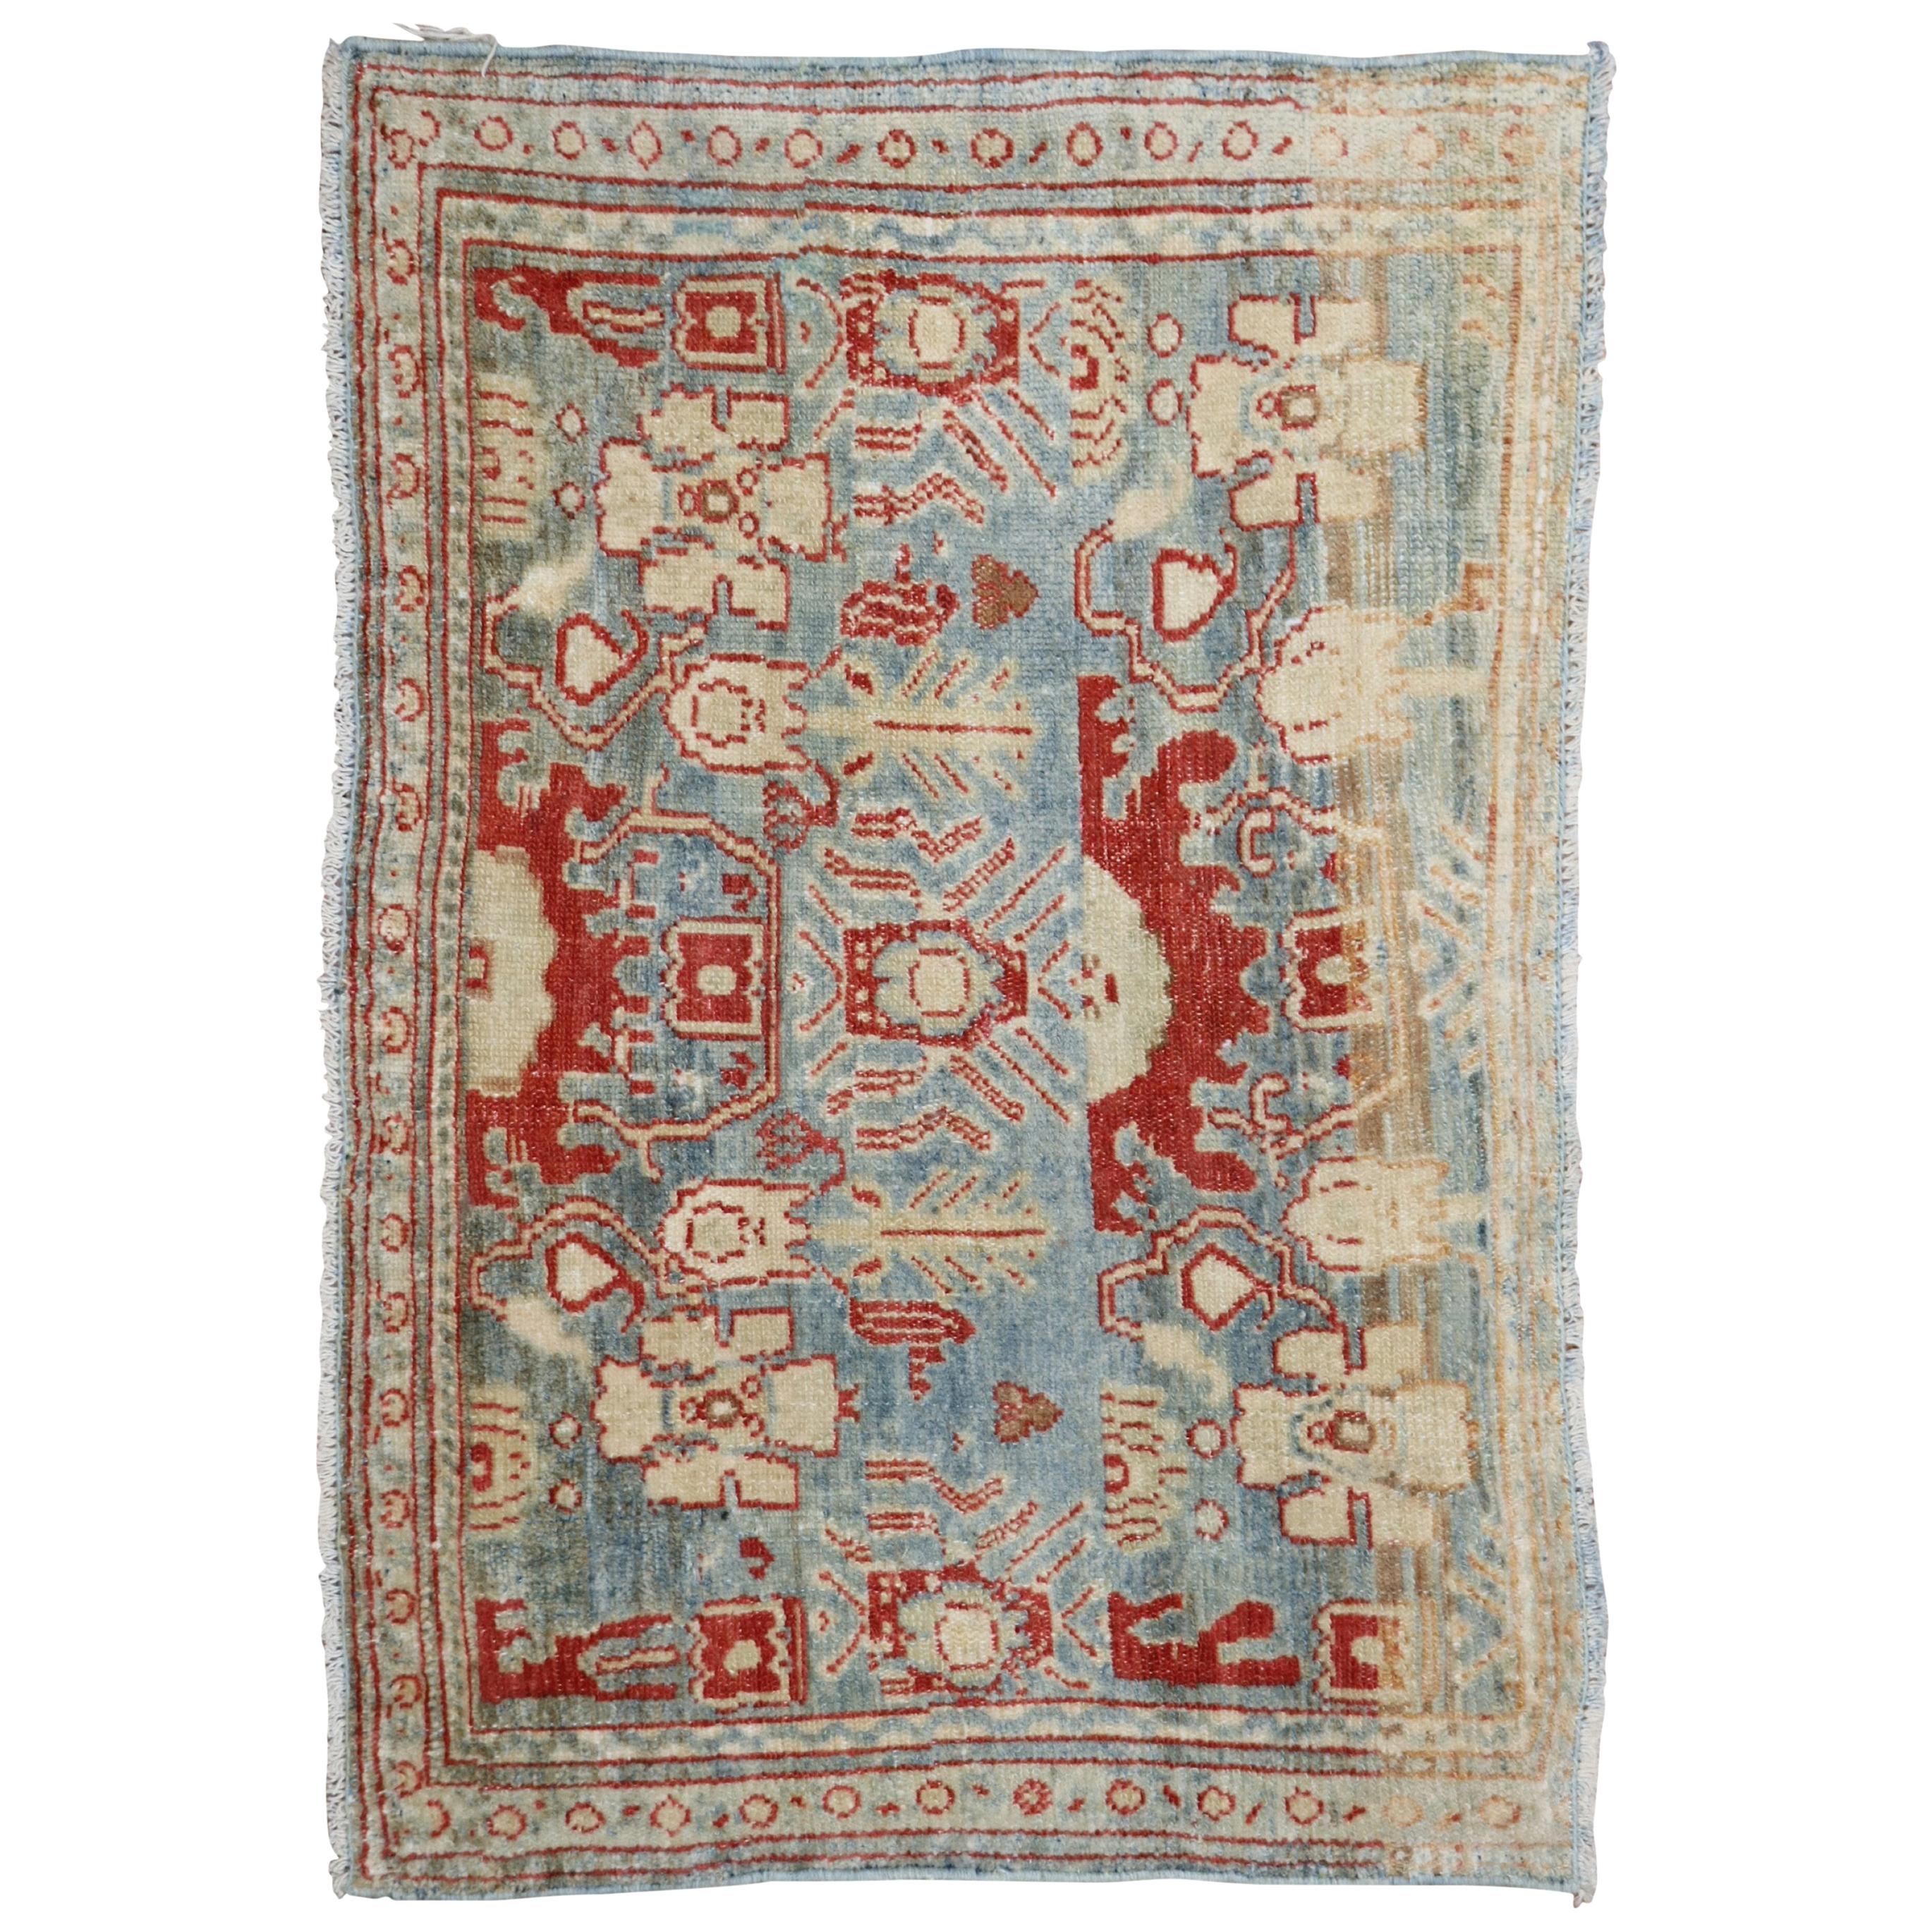 Fine tapis persan ancien de Senneh en tissu